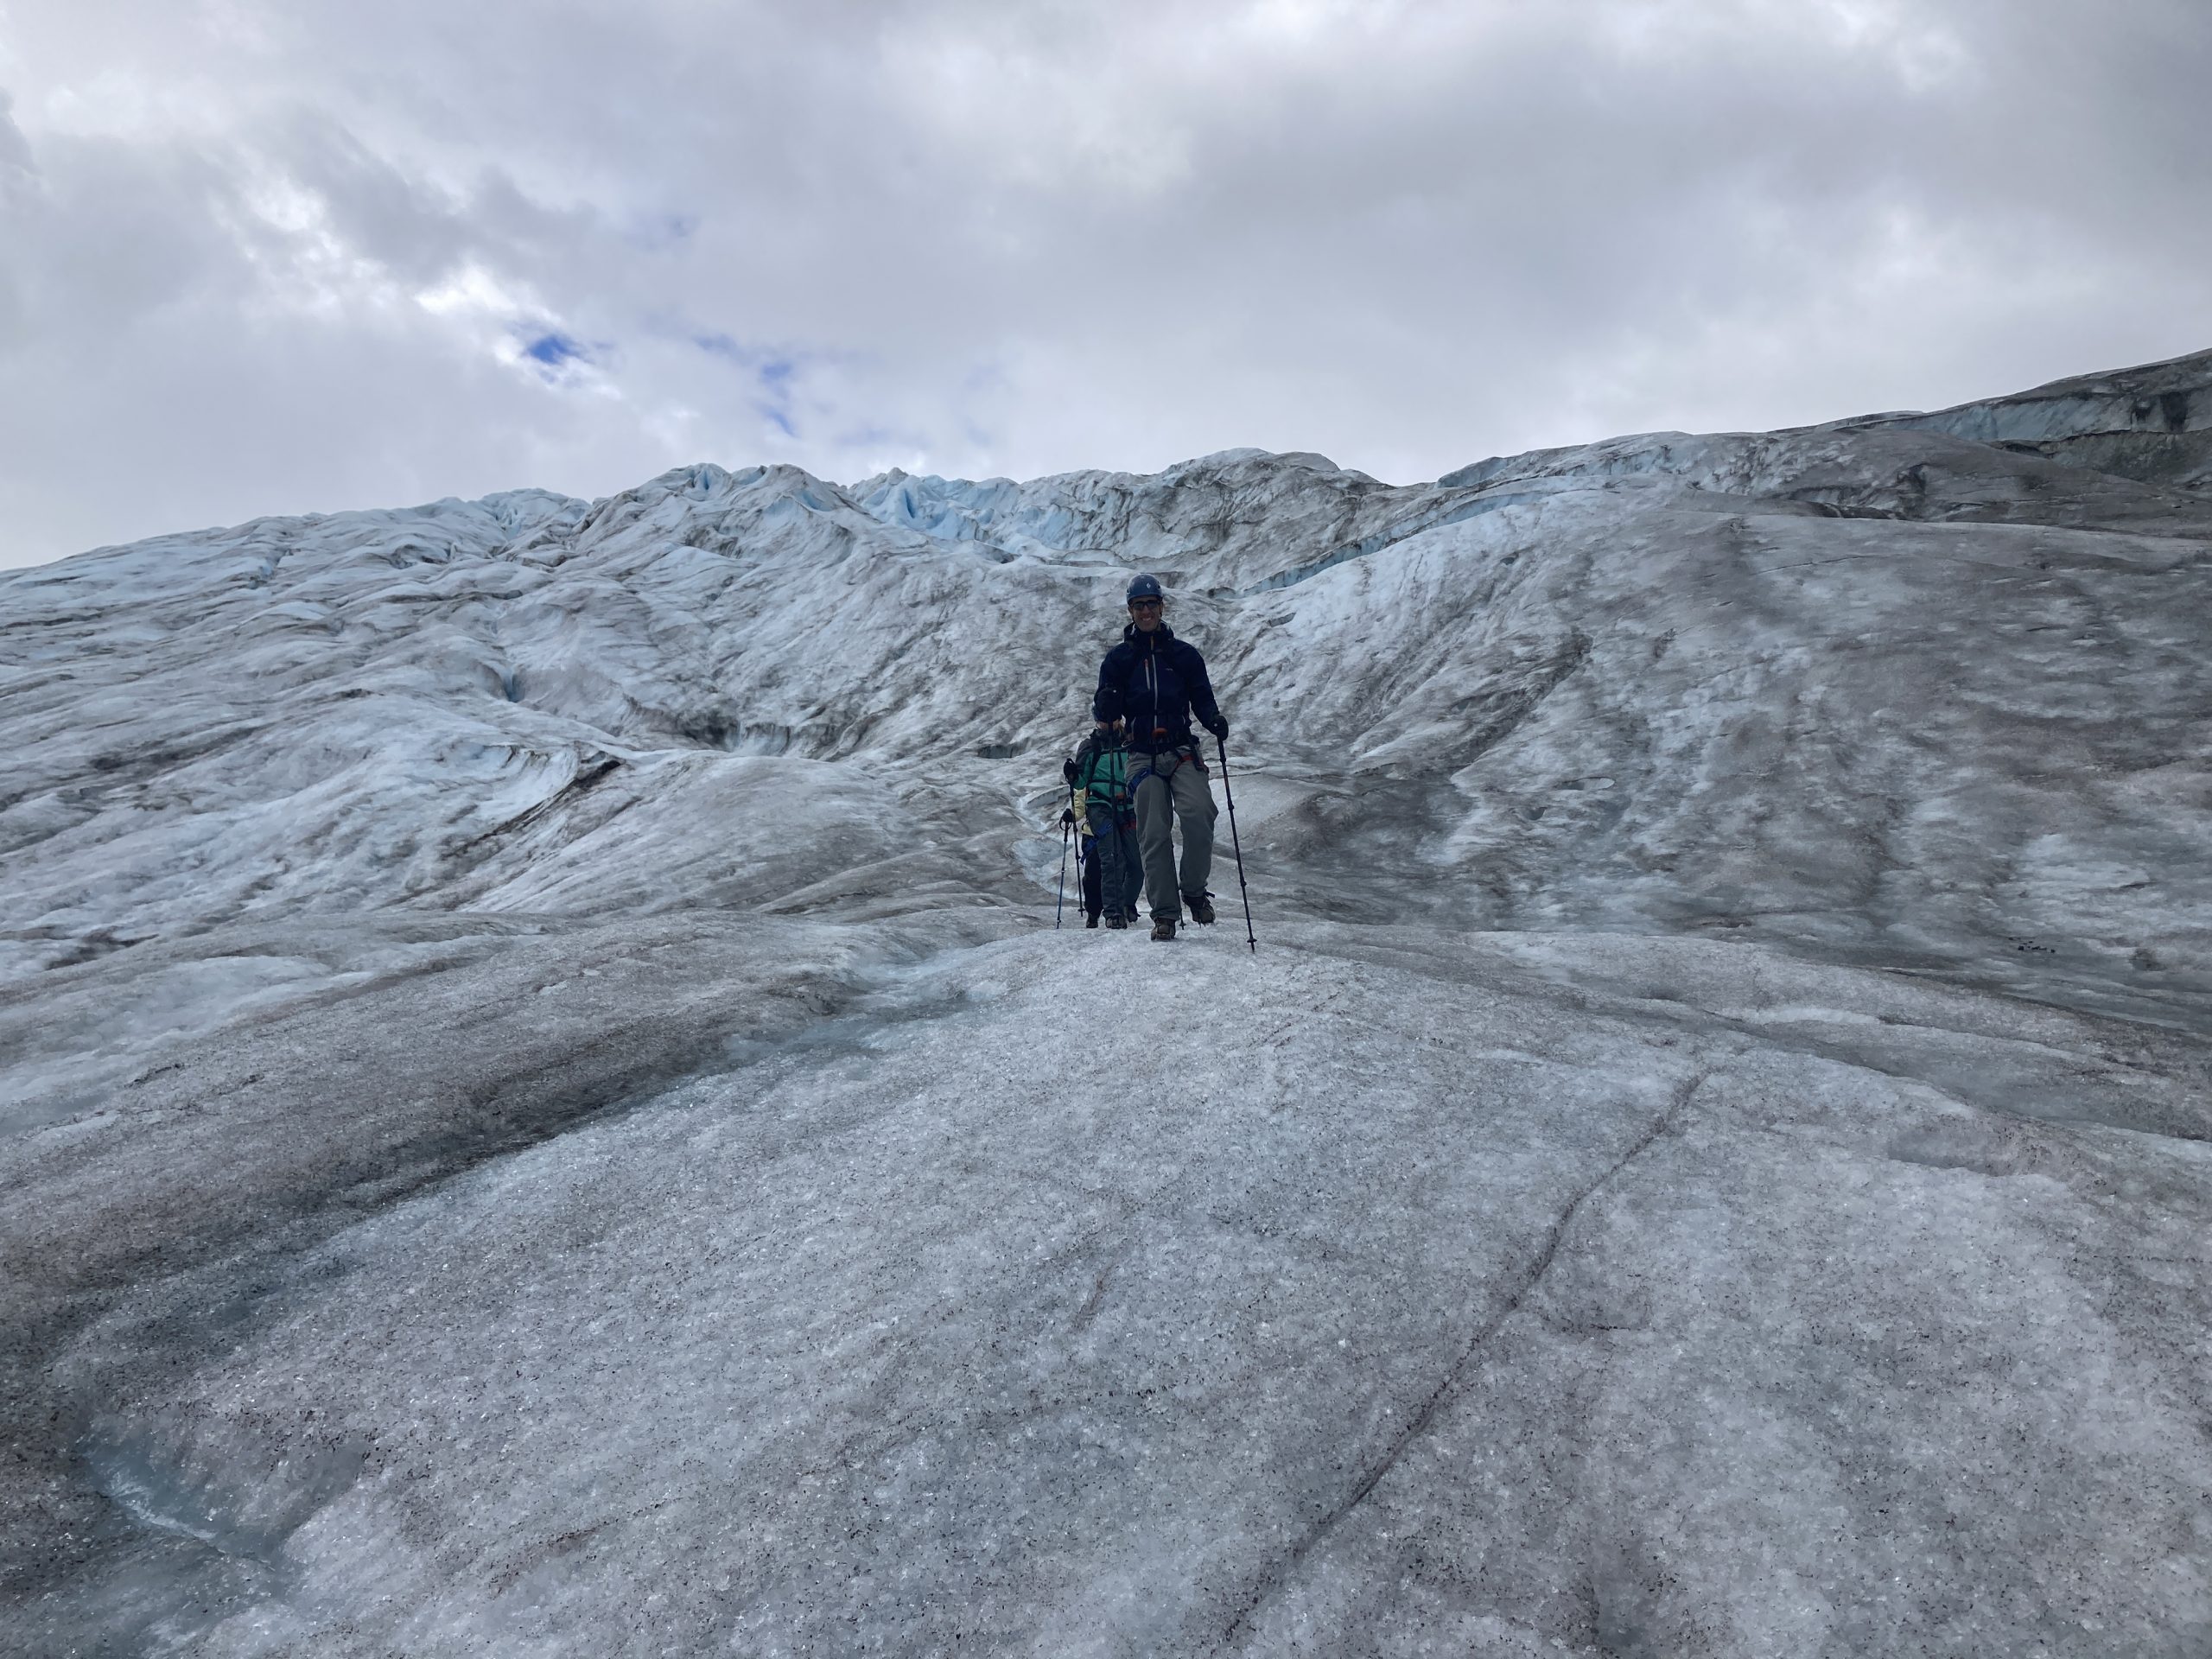 TRIP REPORT: 8/2/22 Exit Glacier Ice Hiking Adventure